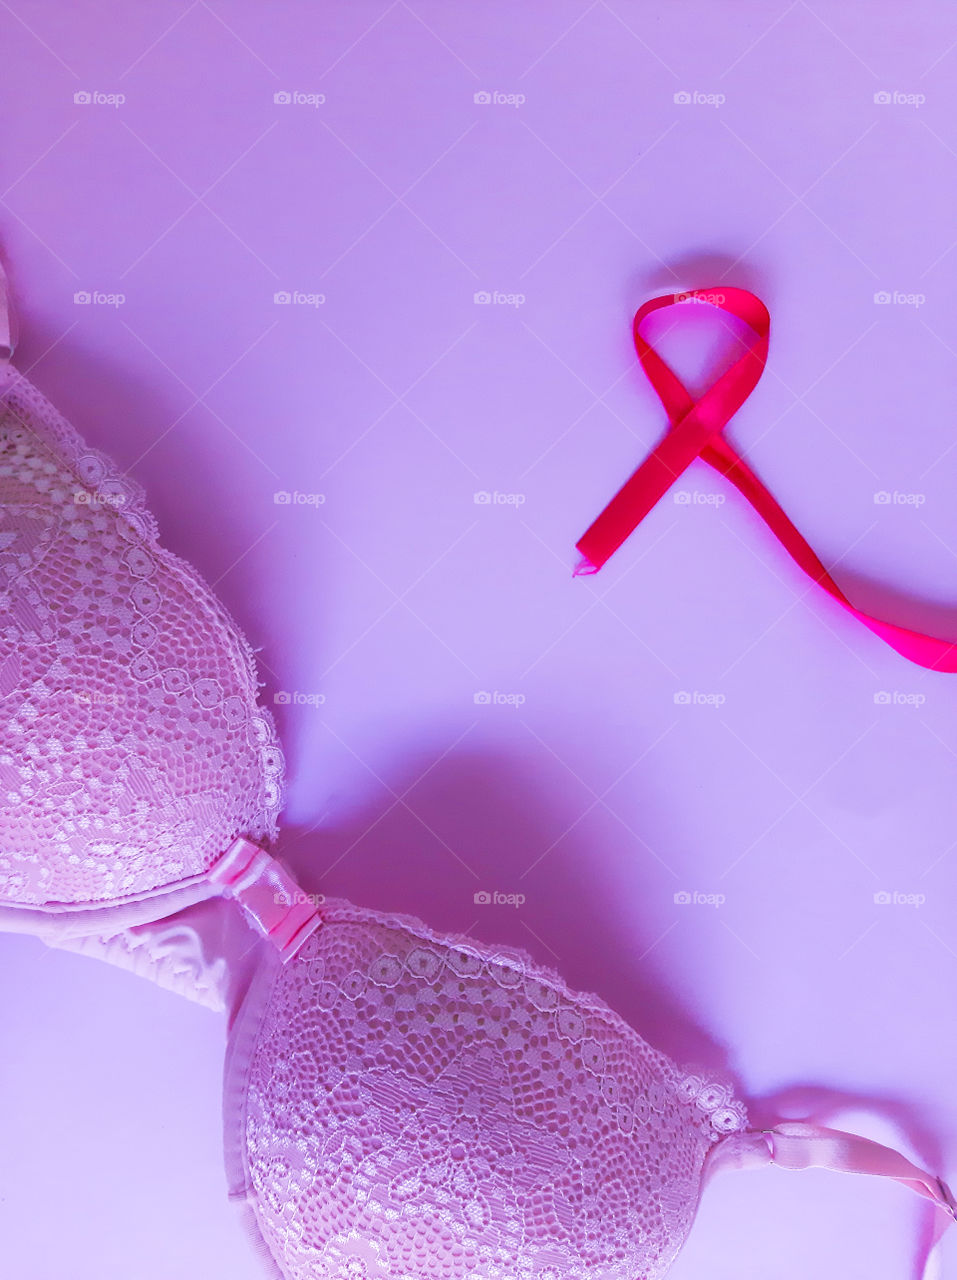 October Pink Breast Cancer Prevention Month